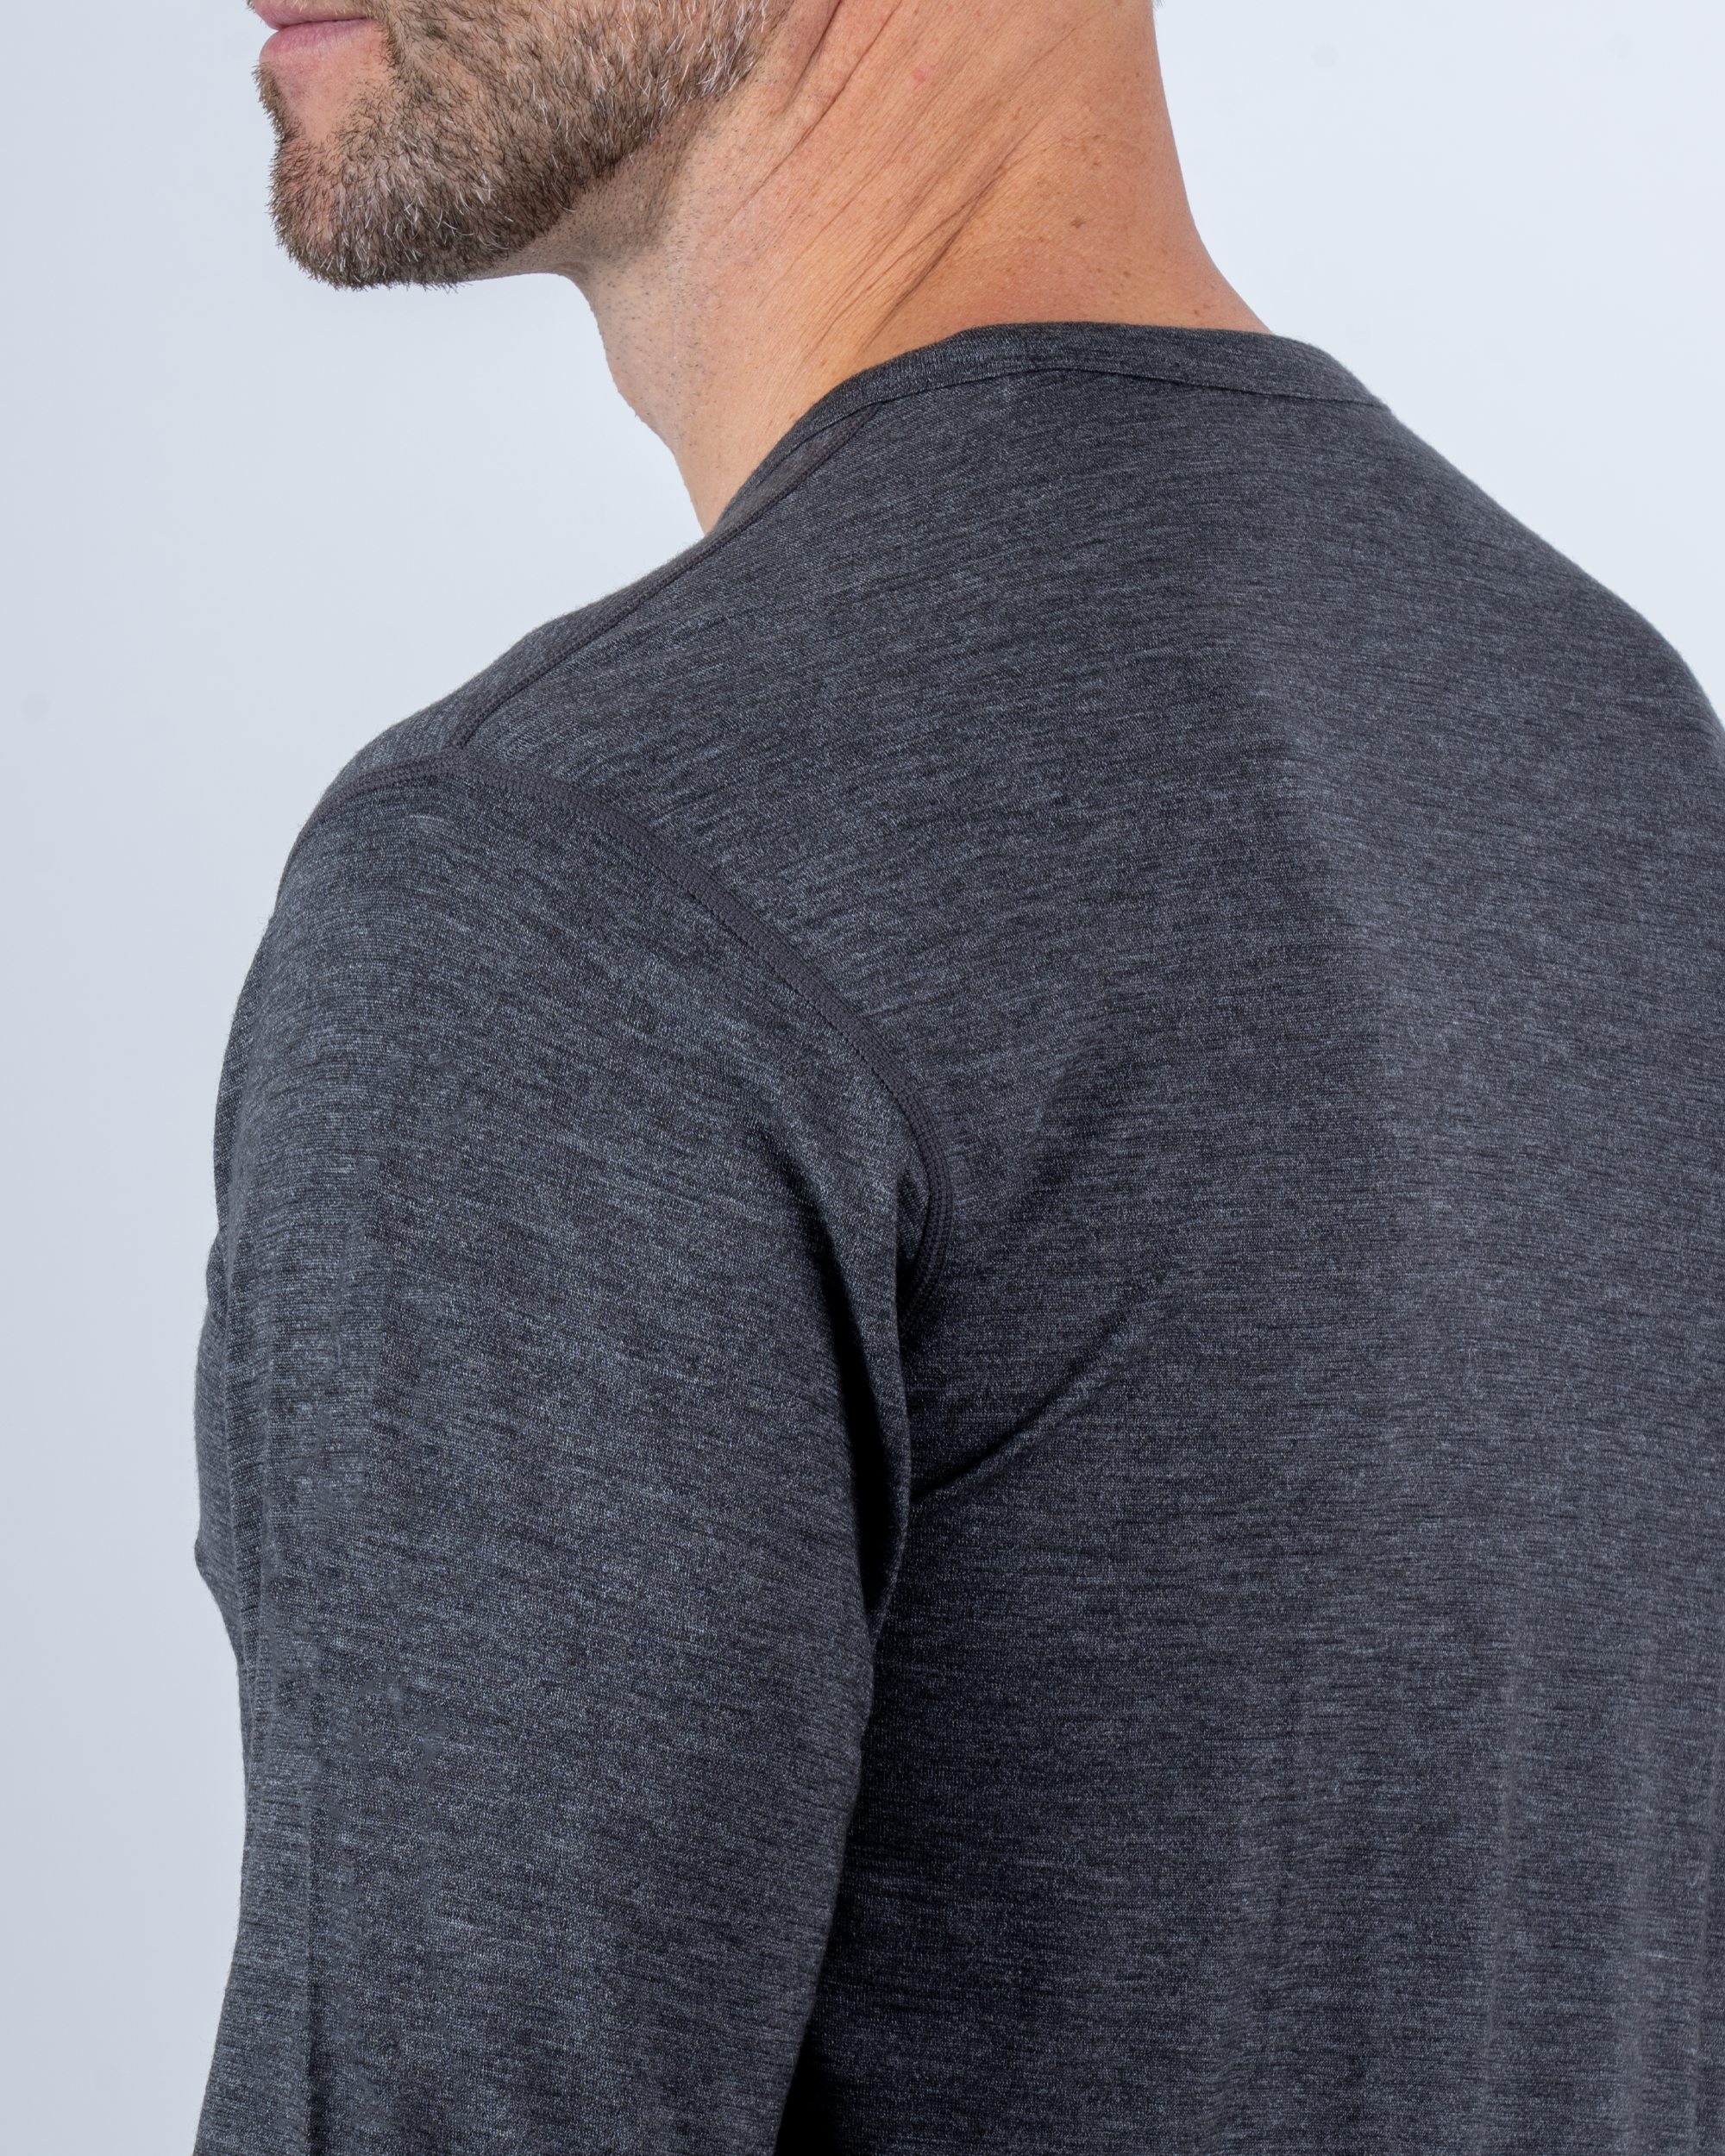 Foreign Rider Co Nuyarn Merino Wool Dark Grey Base Layer Long Sleeve T-Shirt Back Shoulder and Neck Detail